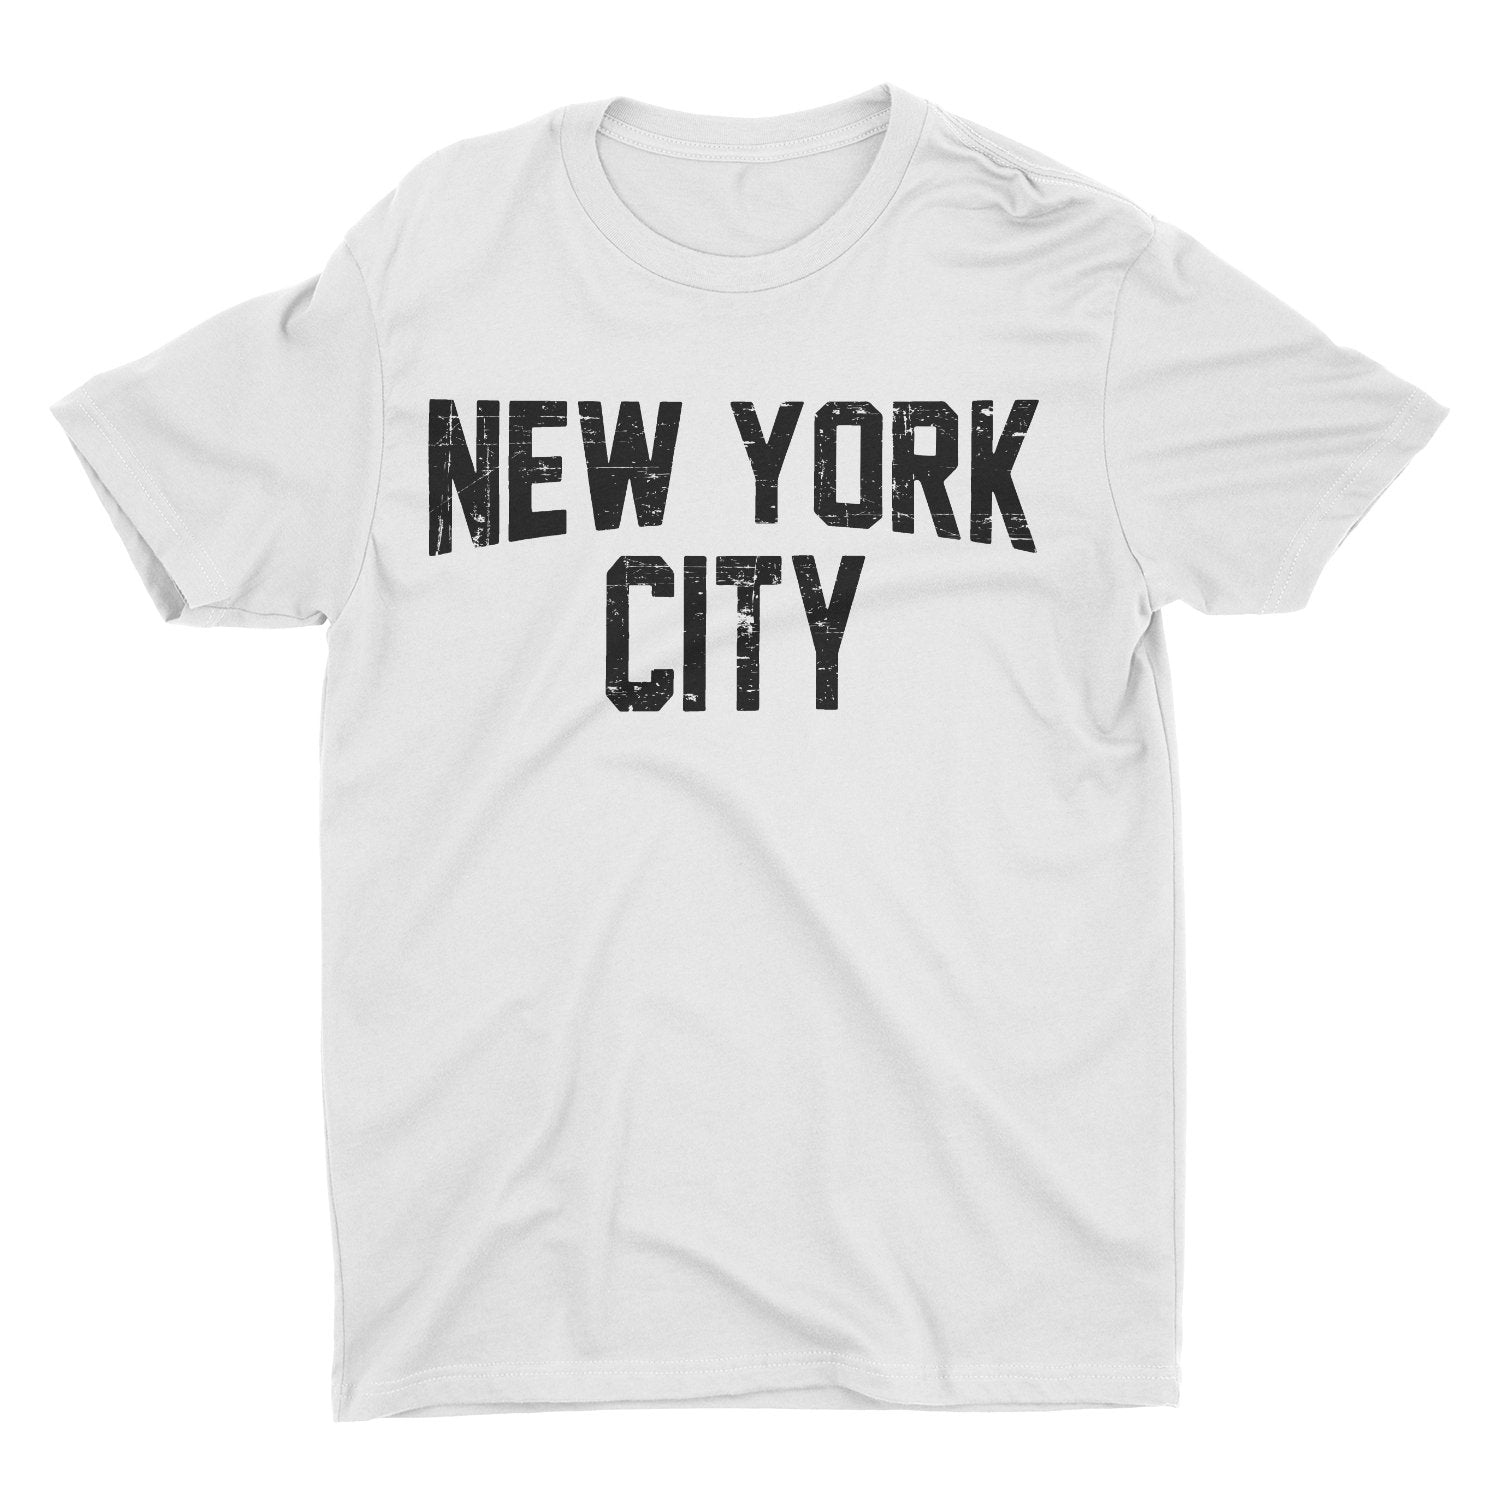 New York City T-Shirt Distressed Screenprinted White Lennon Tee